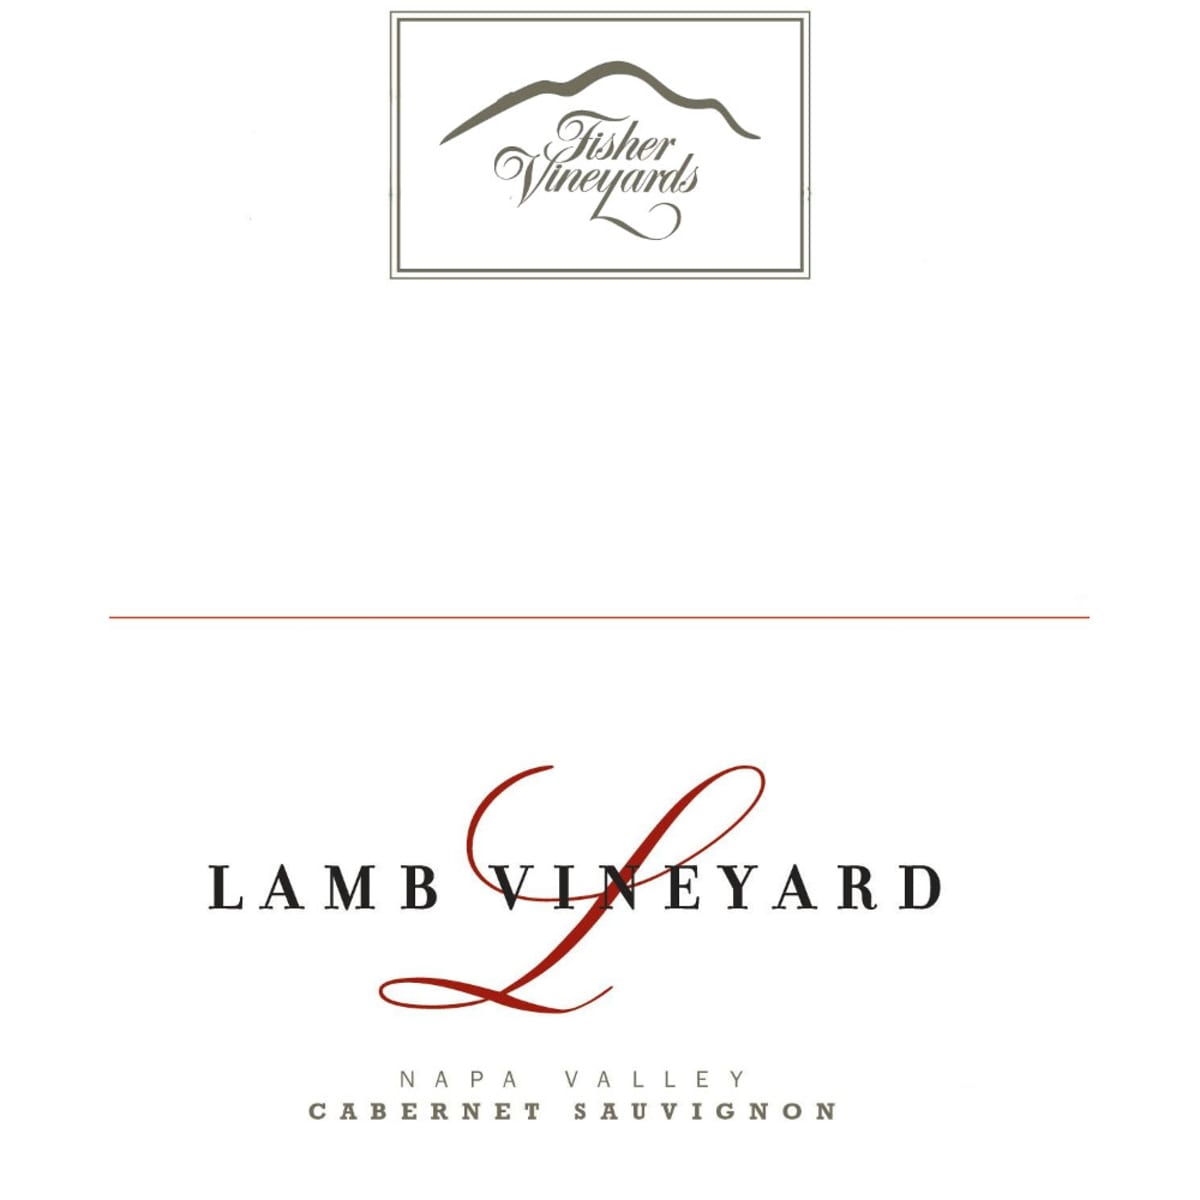 Fisher Vineyards Lamb Vineyard Cabernet Sauvignon 2011 Front Label